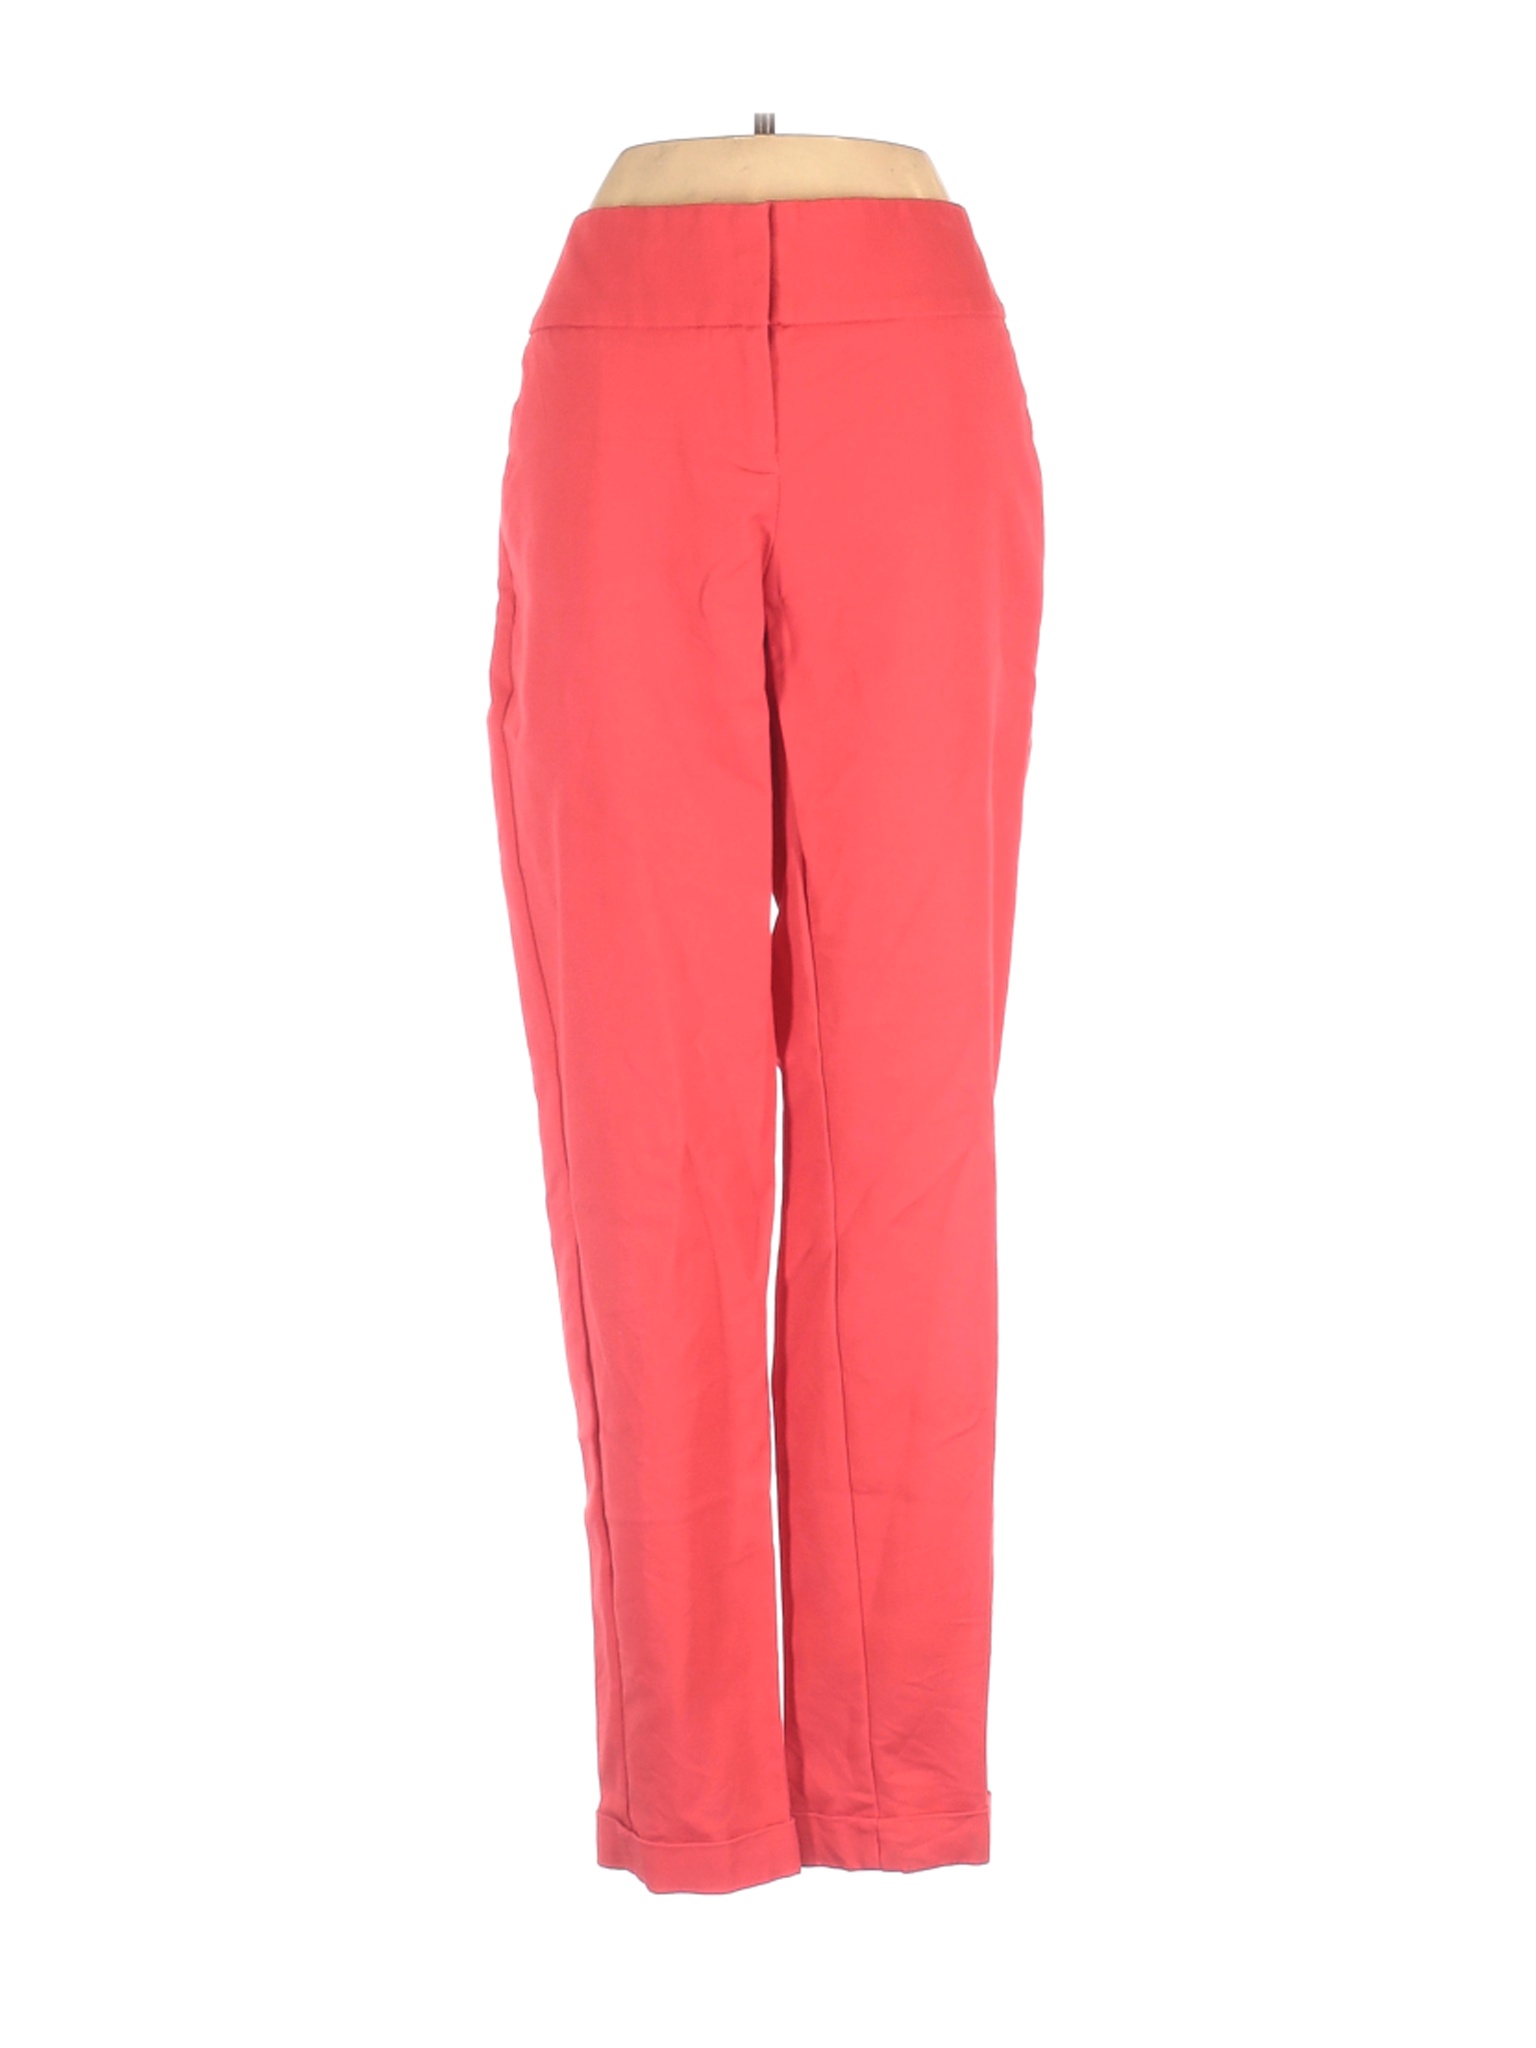 Worthington Women Pink Dress Pants 4 | eBay